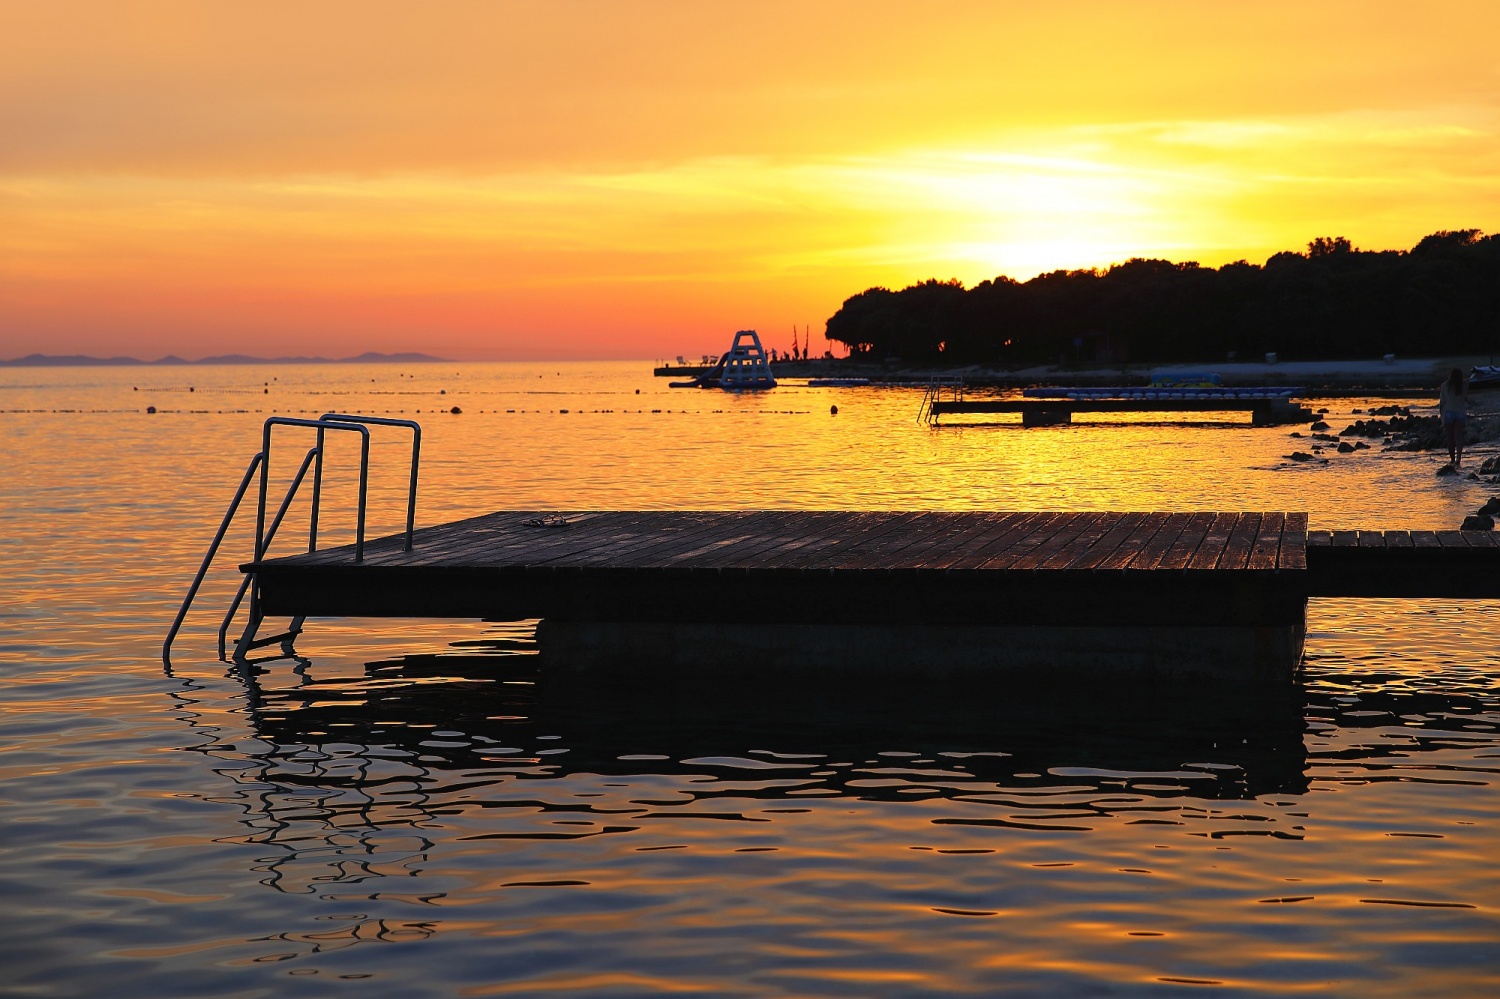 Amaizing sunset on a beach in Zadar region